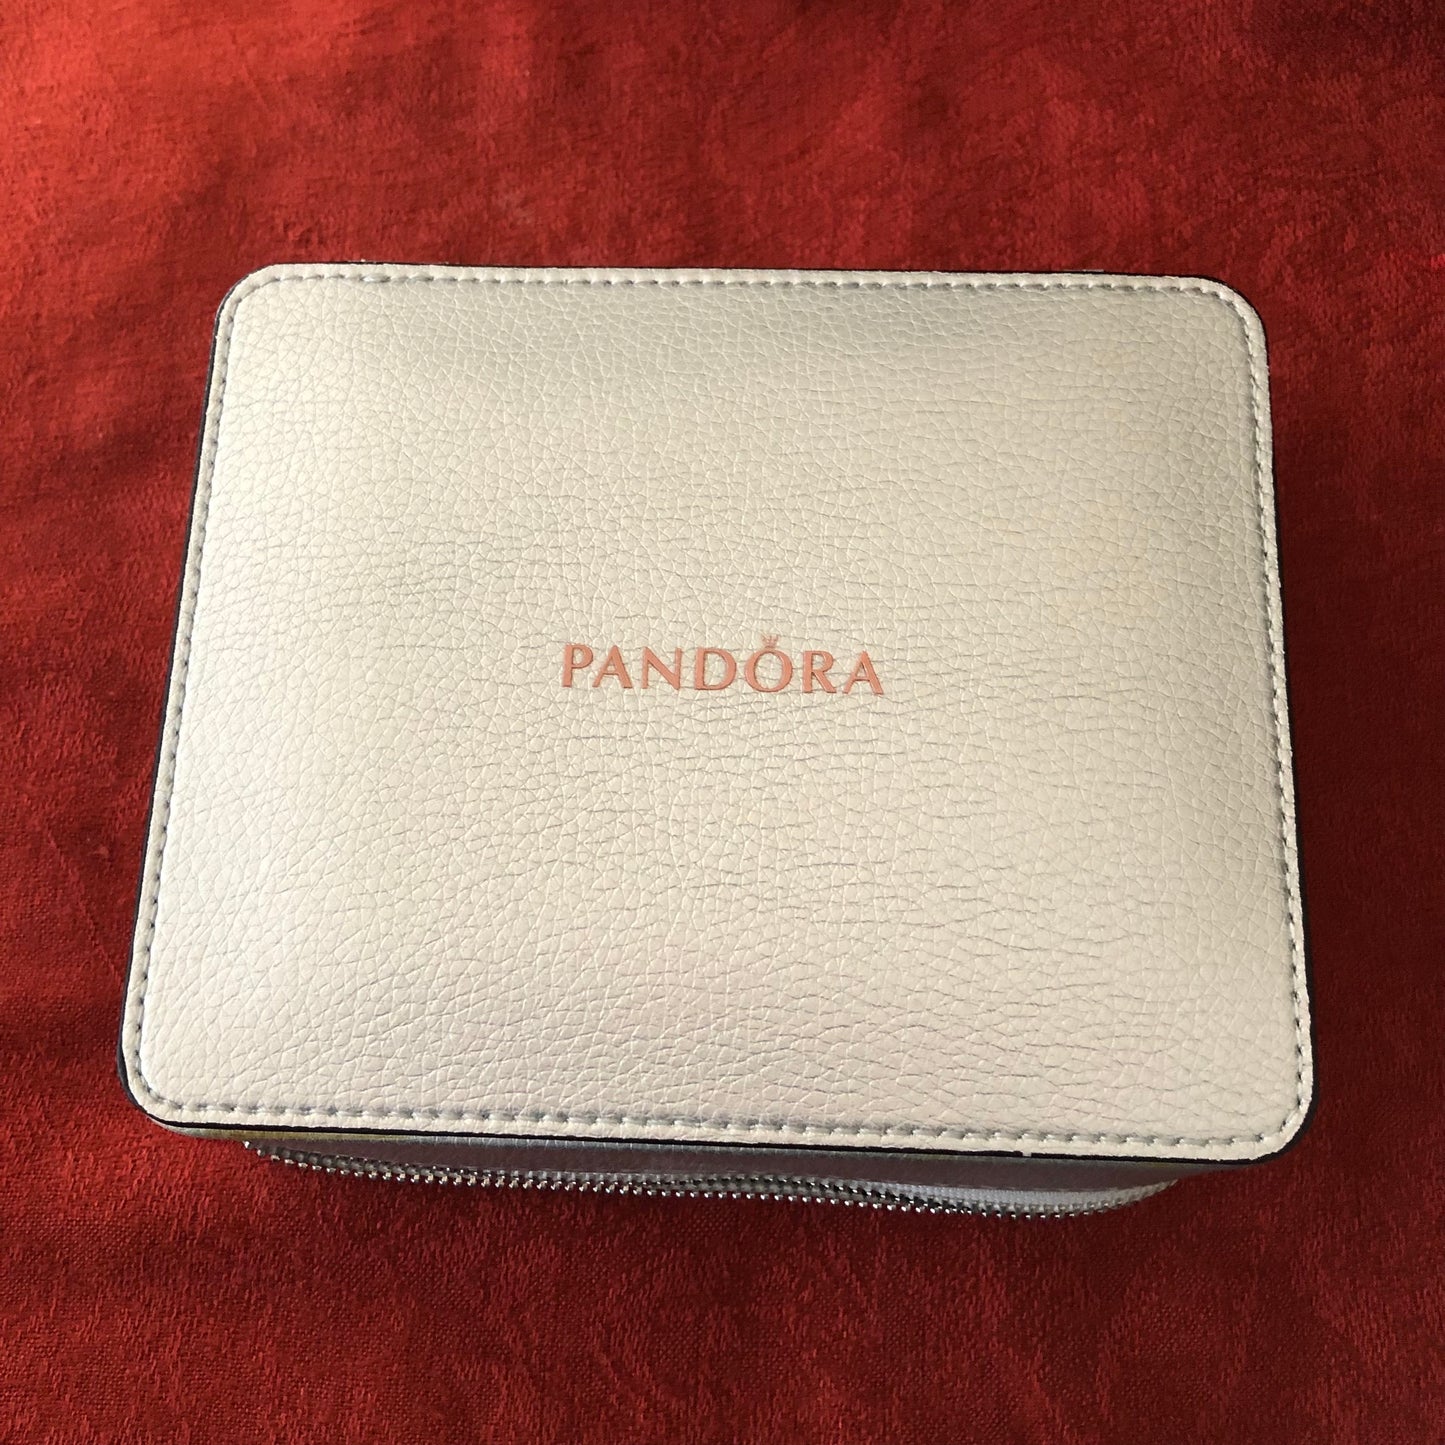 Pandora Travel Jewelry Box